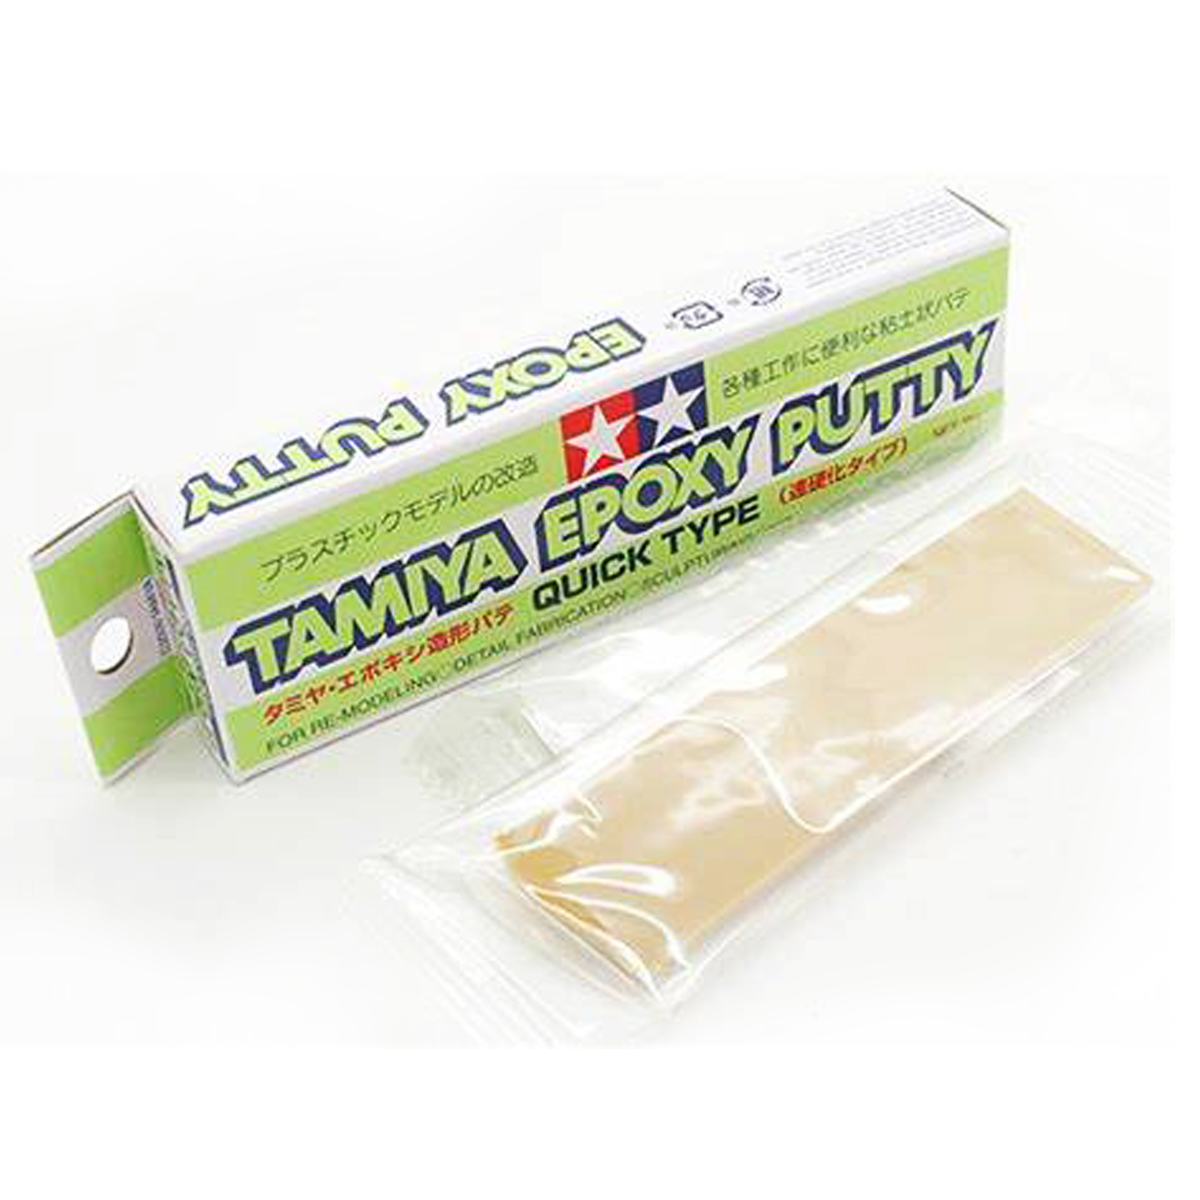 Tamiya Epoxy Putty (Quick Type) - Εποξειδικός στόκος Tamiya (Ταχείας Πήξεως)